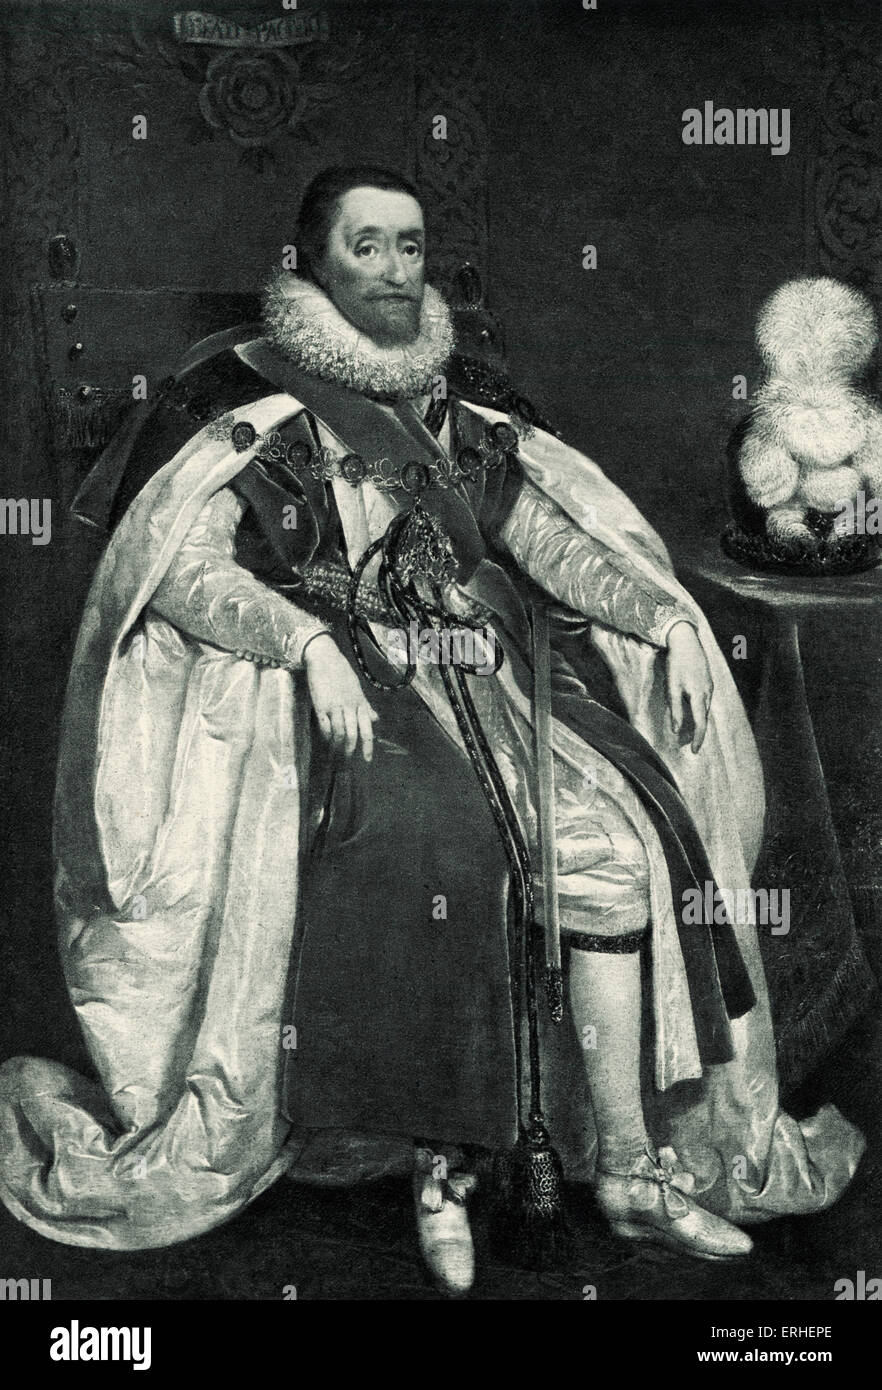 König James I - englische König - Porträt 19 Juni 1566 – 27. März 1625 - nach dem Porträt von Paul Van Somer Stockfoto